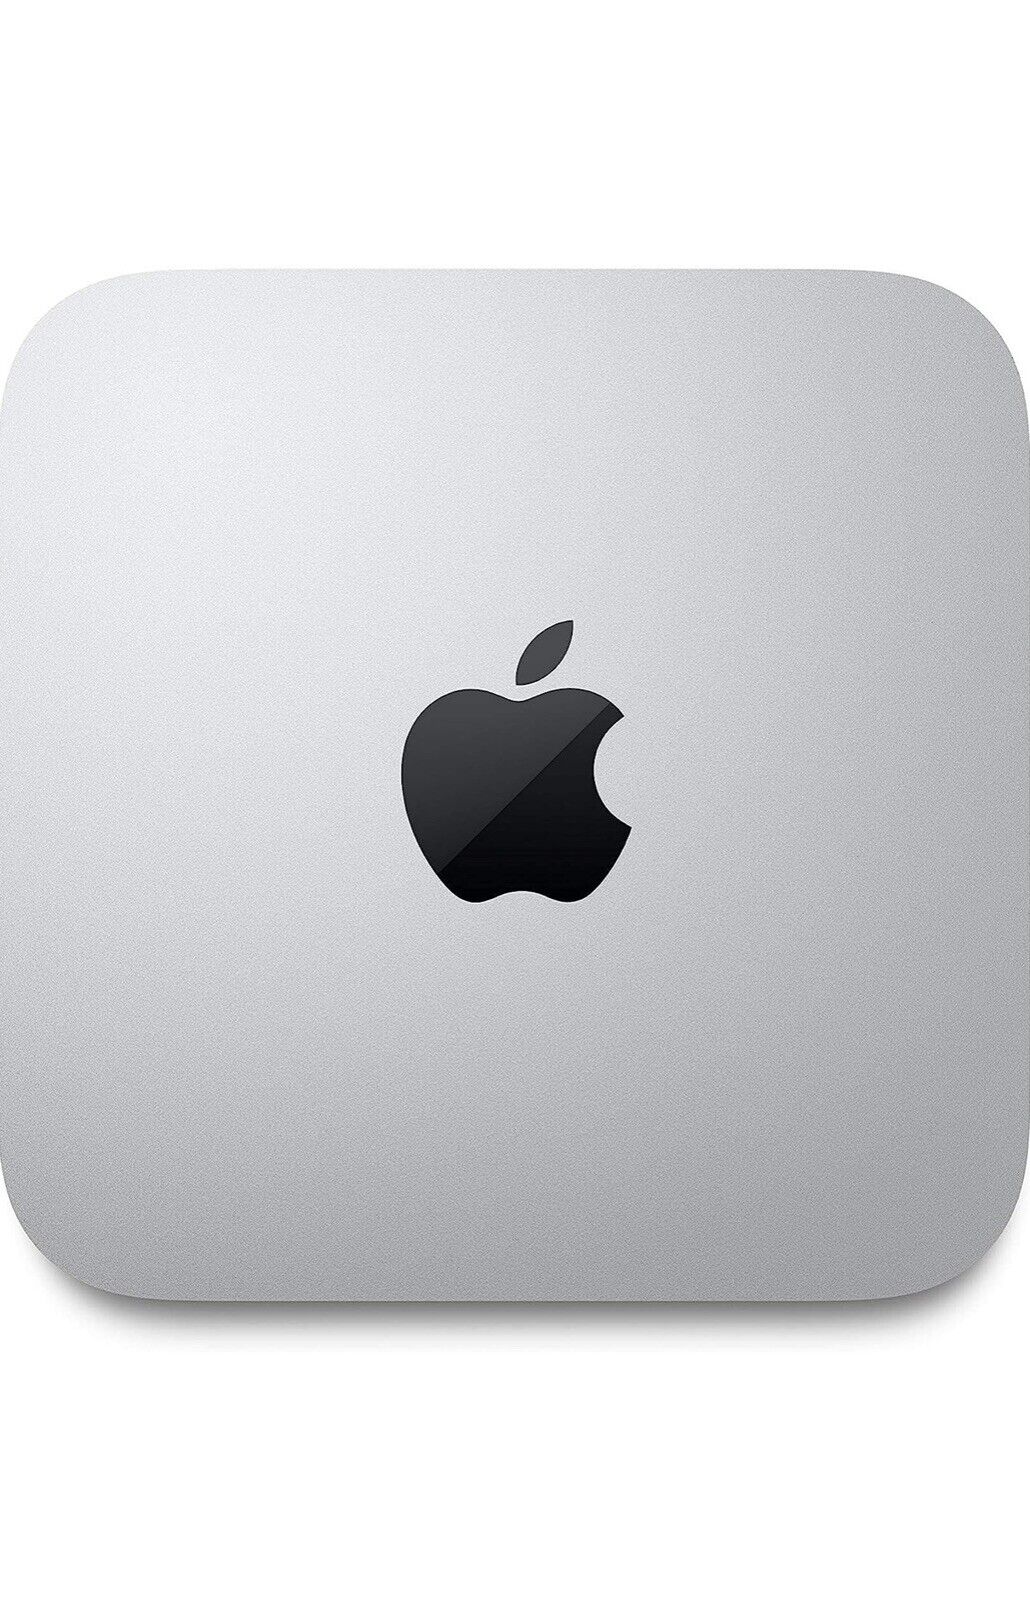 Apple Mac Mini M1-8CGPU Late 2020 512GB SSD 8GB RAM Silver - Excellent Condition